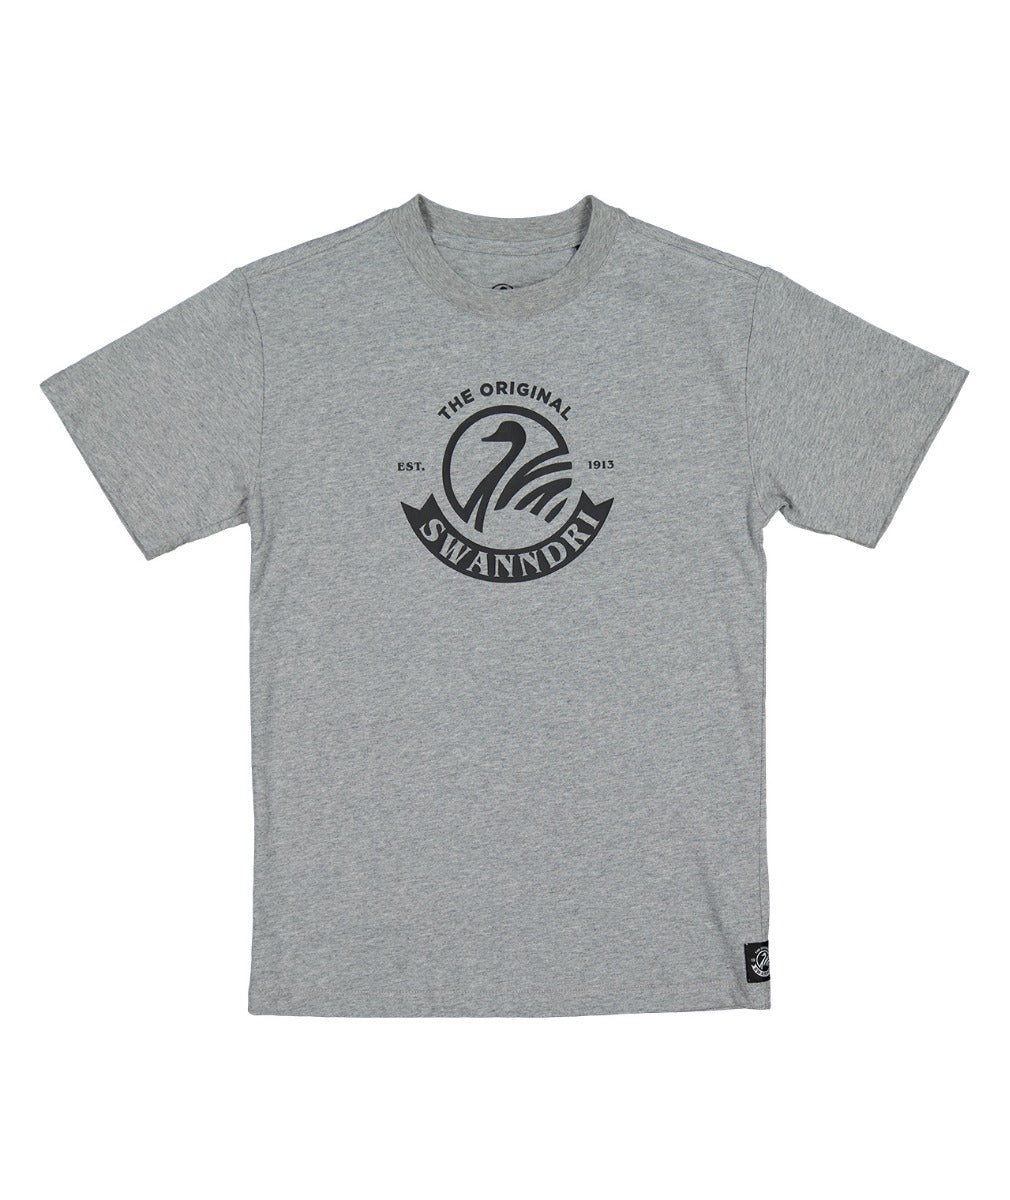 Kids Original V2 T-Shirt | Grey Marle/Black - Swanndri - Beechworth Emporium